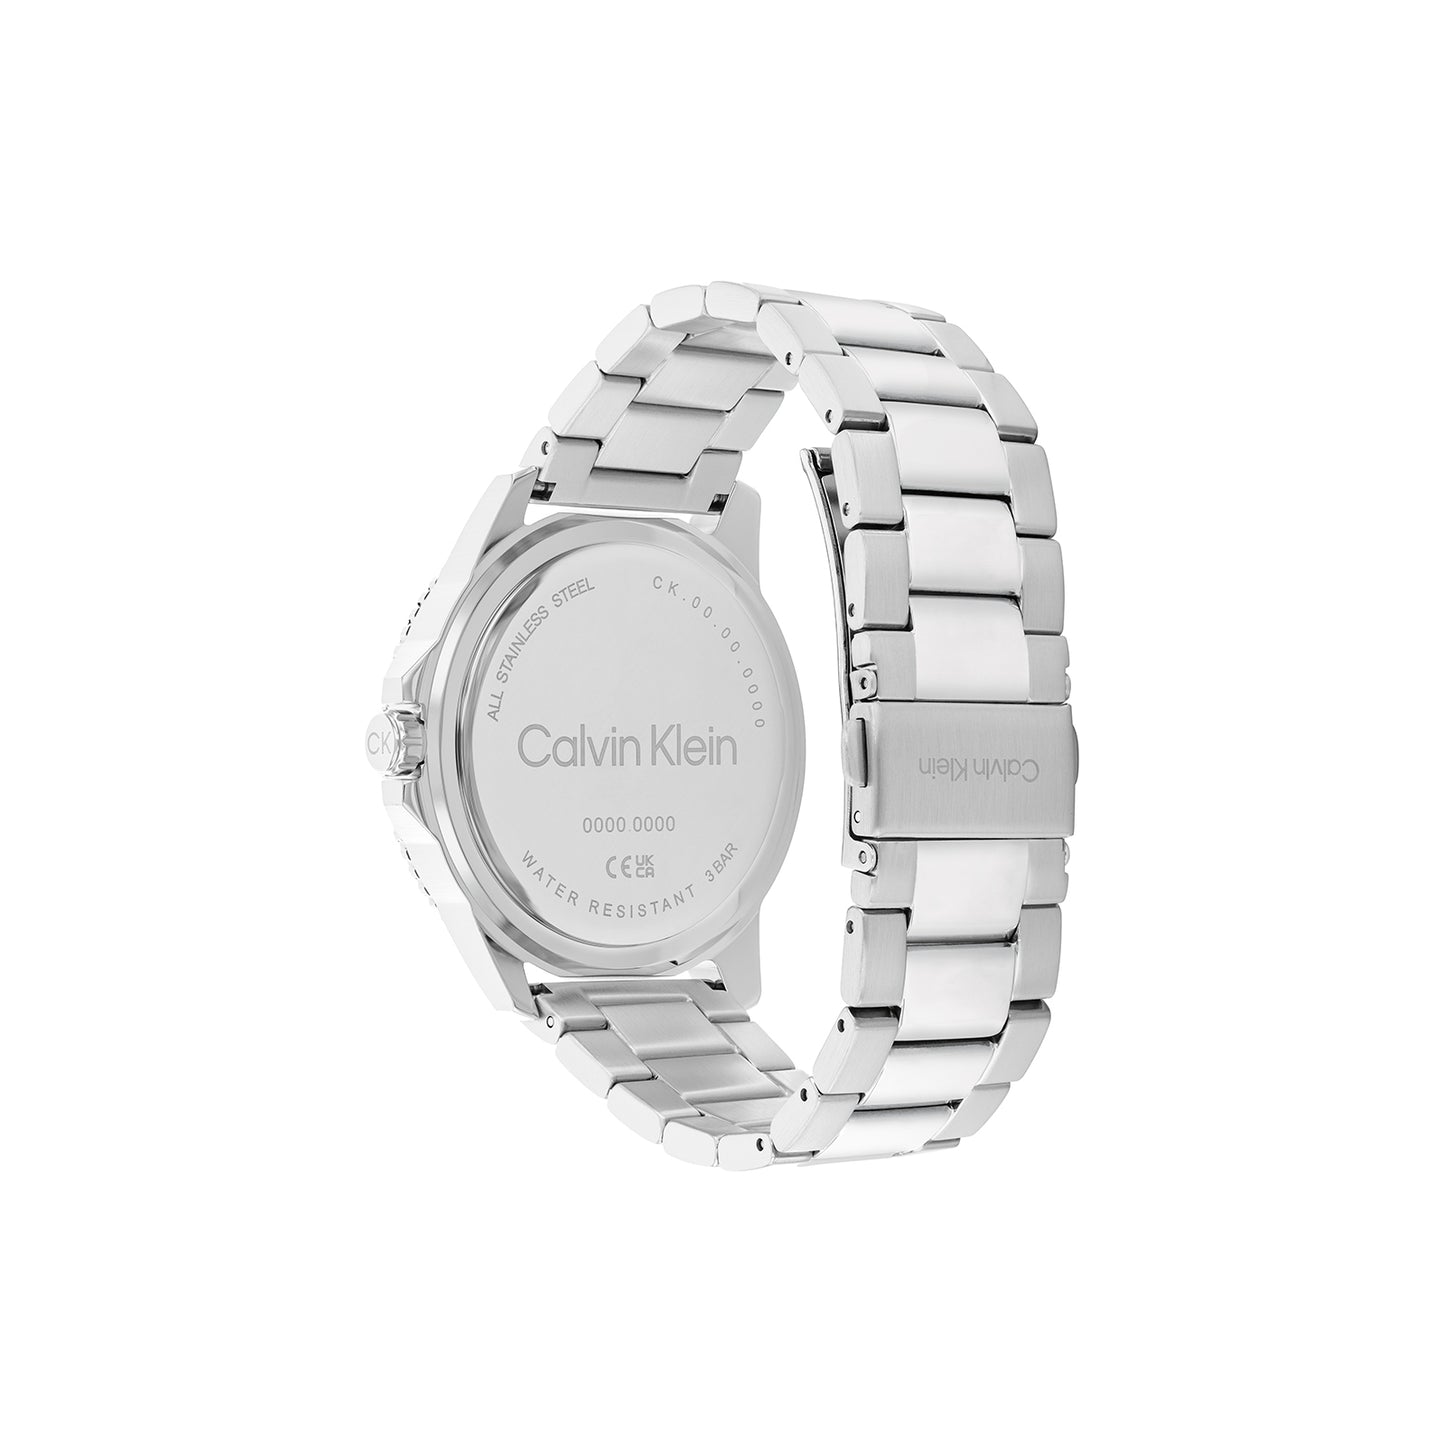 Calvin Klein 25200385 Men's Steel Watch